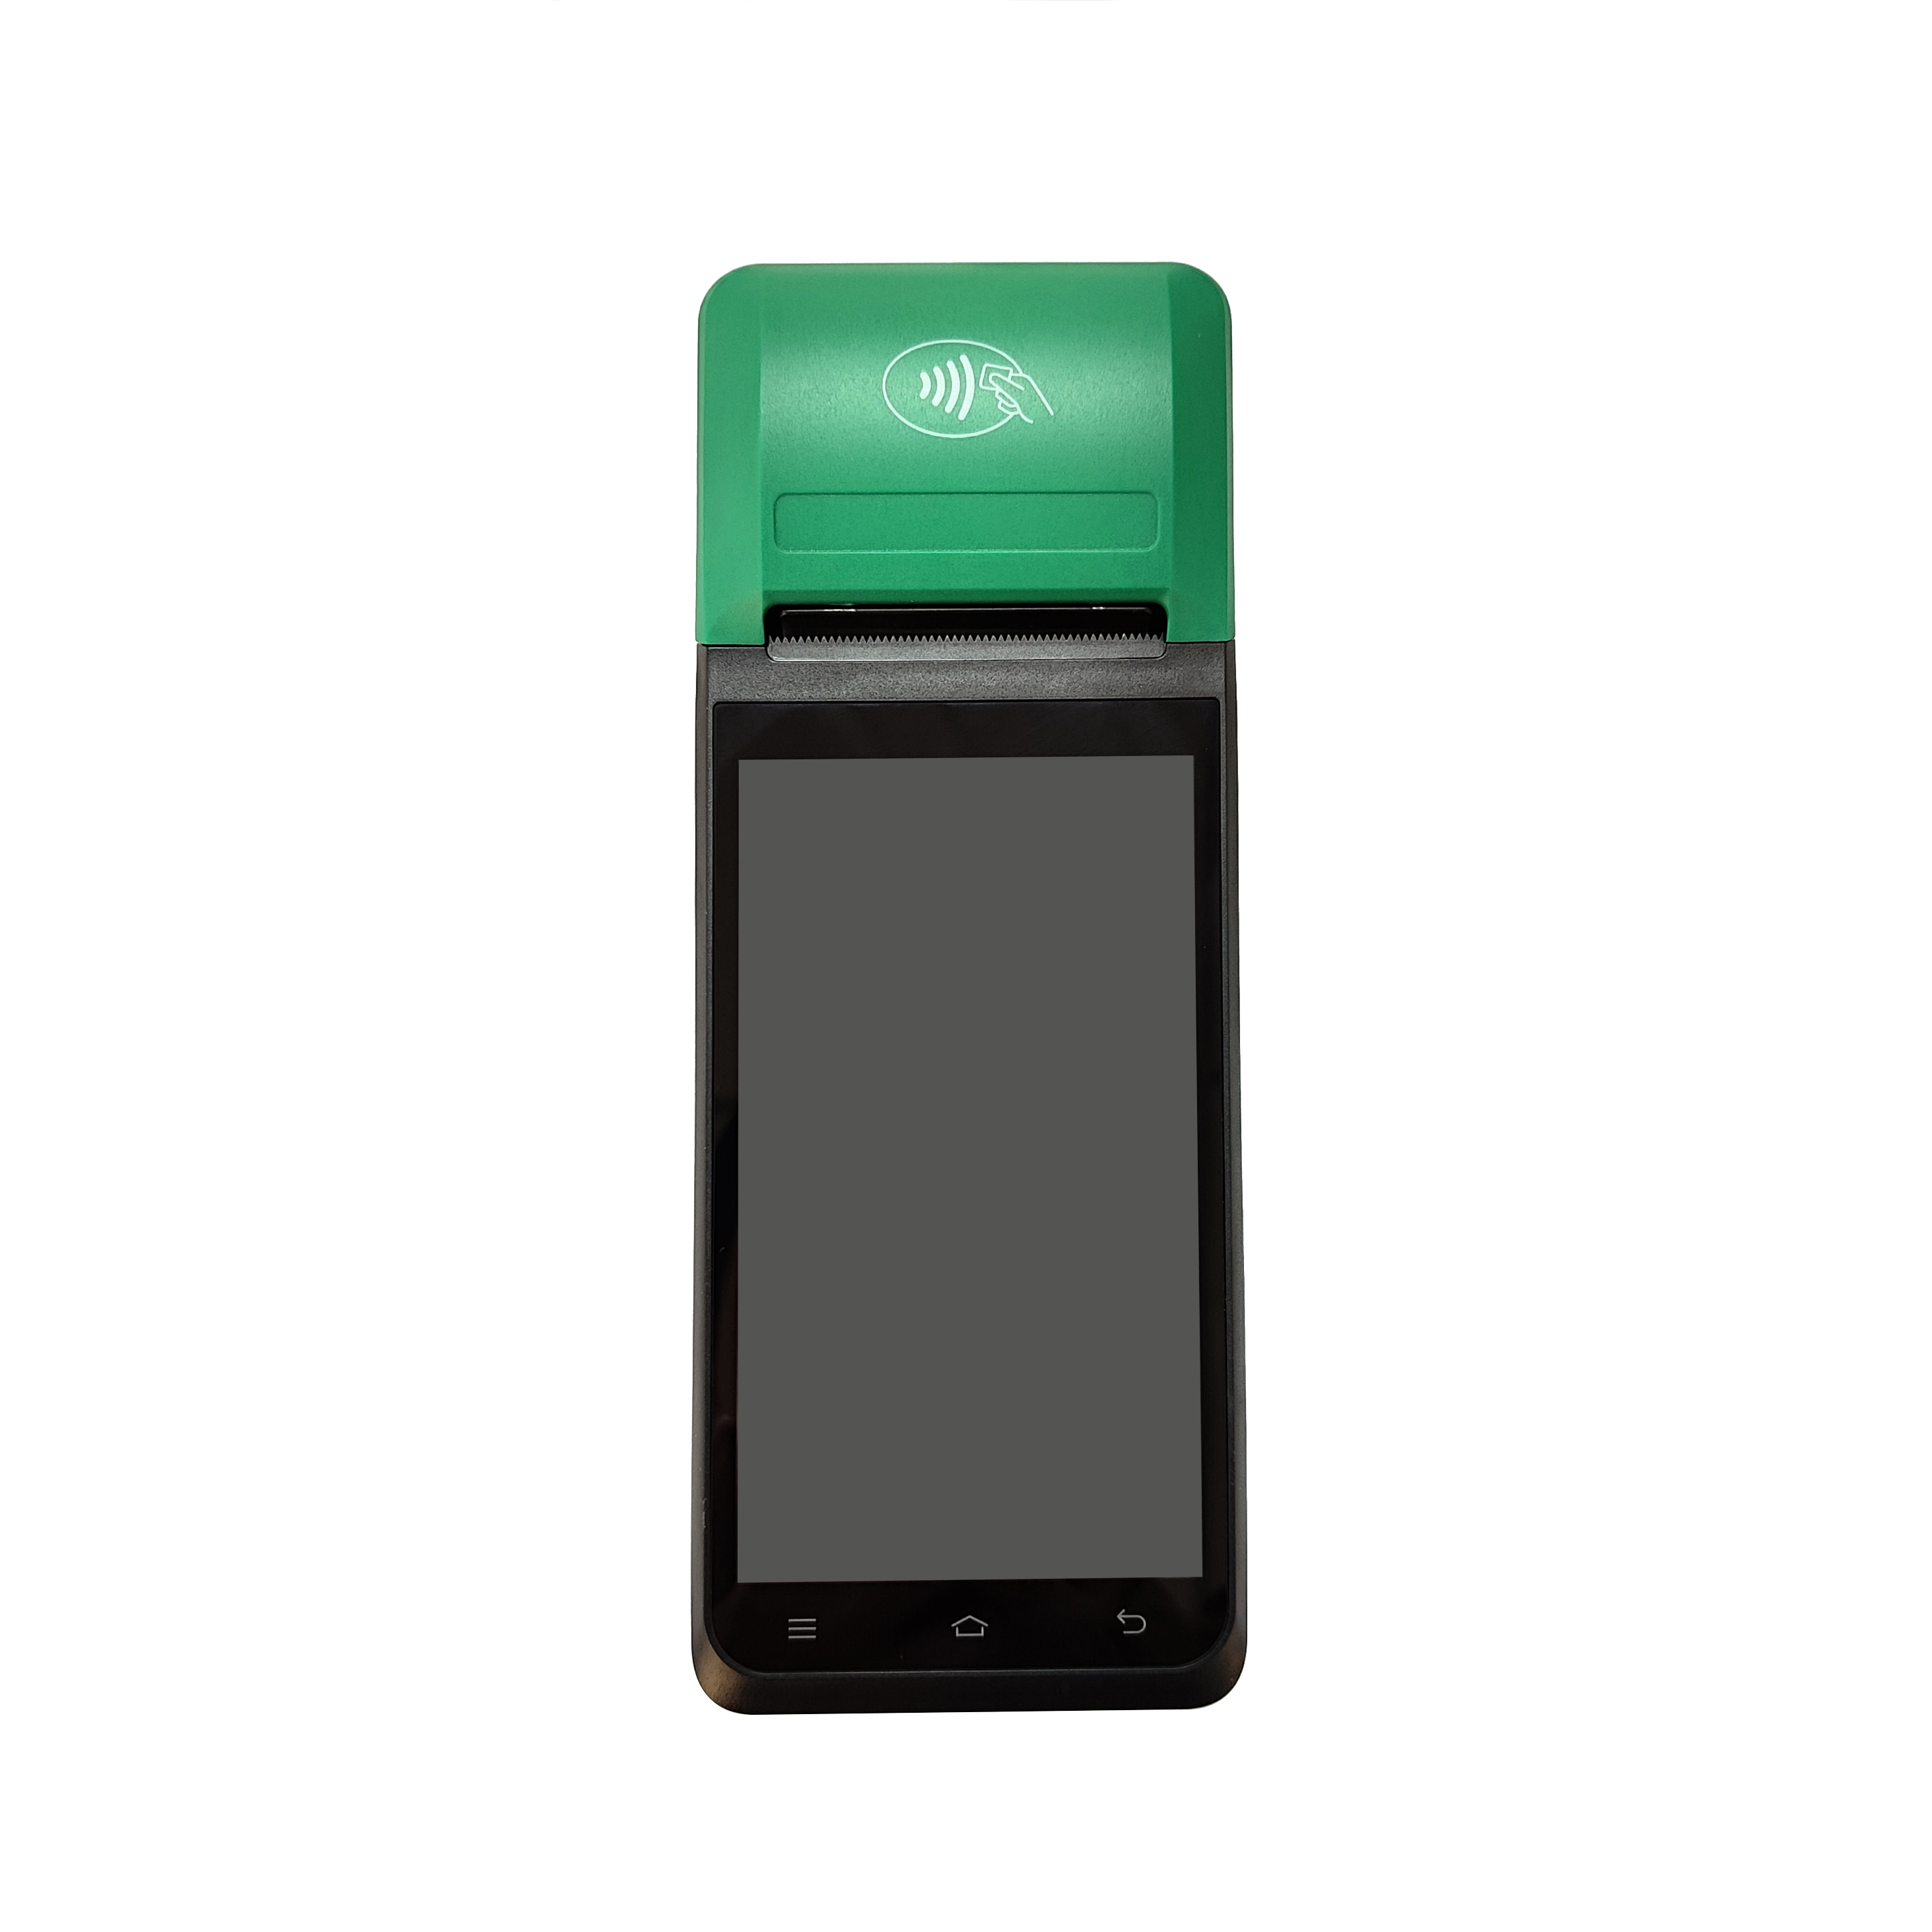 POS-T2 5.5 inch Android Handheld Mobile Pos Terminal Wth Printer - COPY - agoj0d